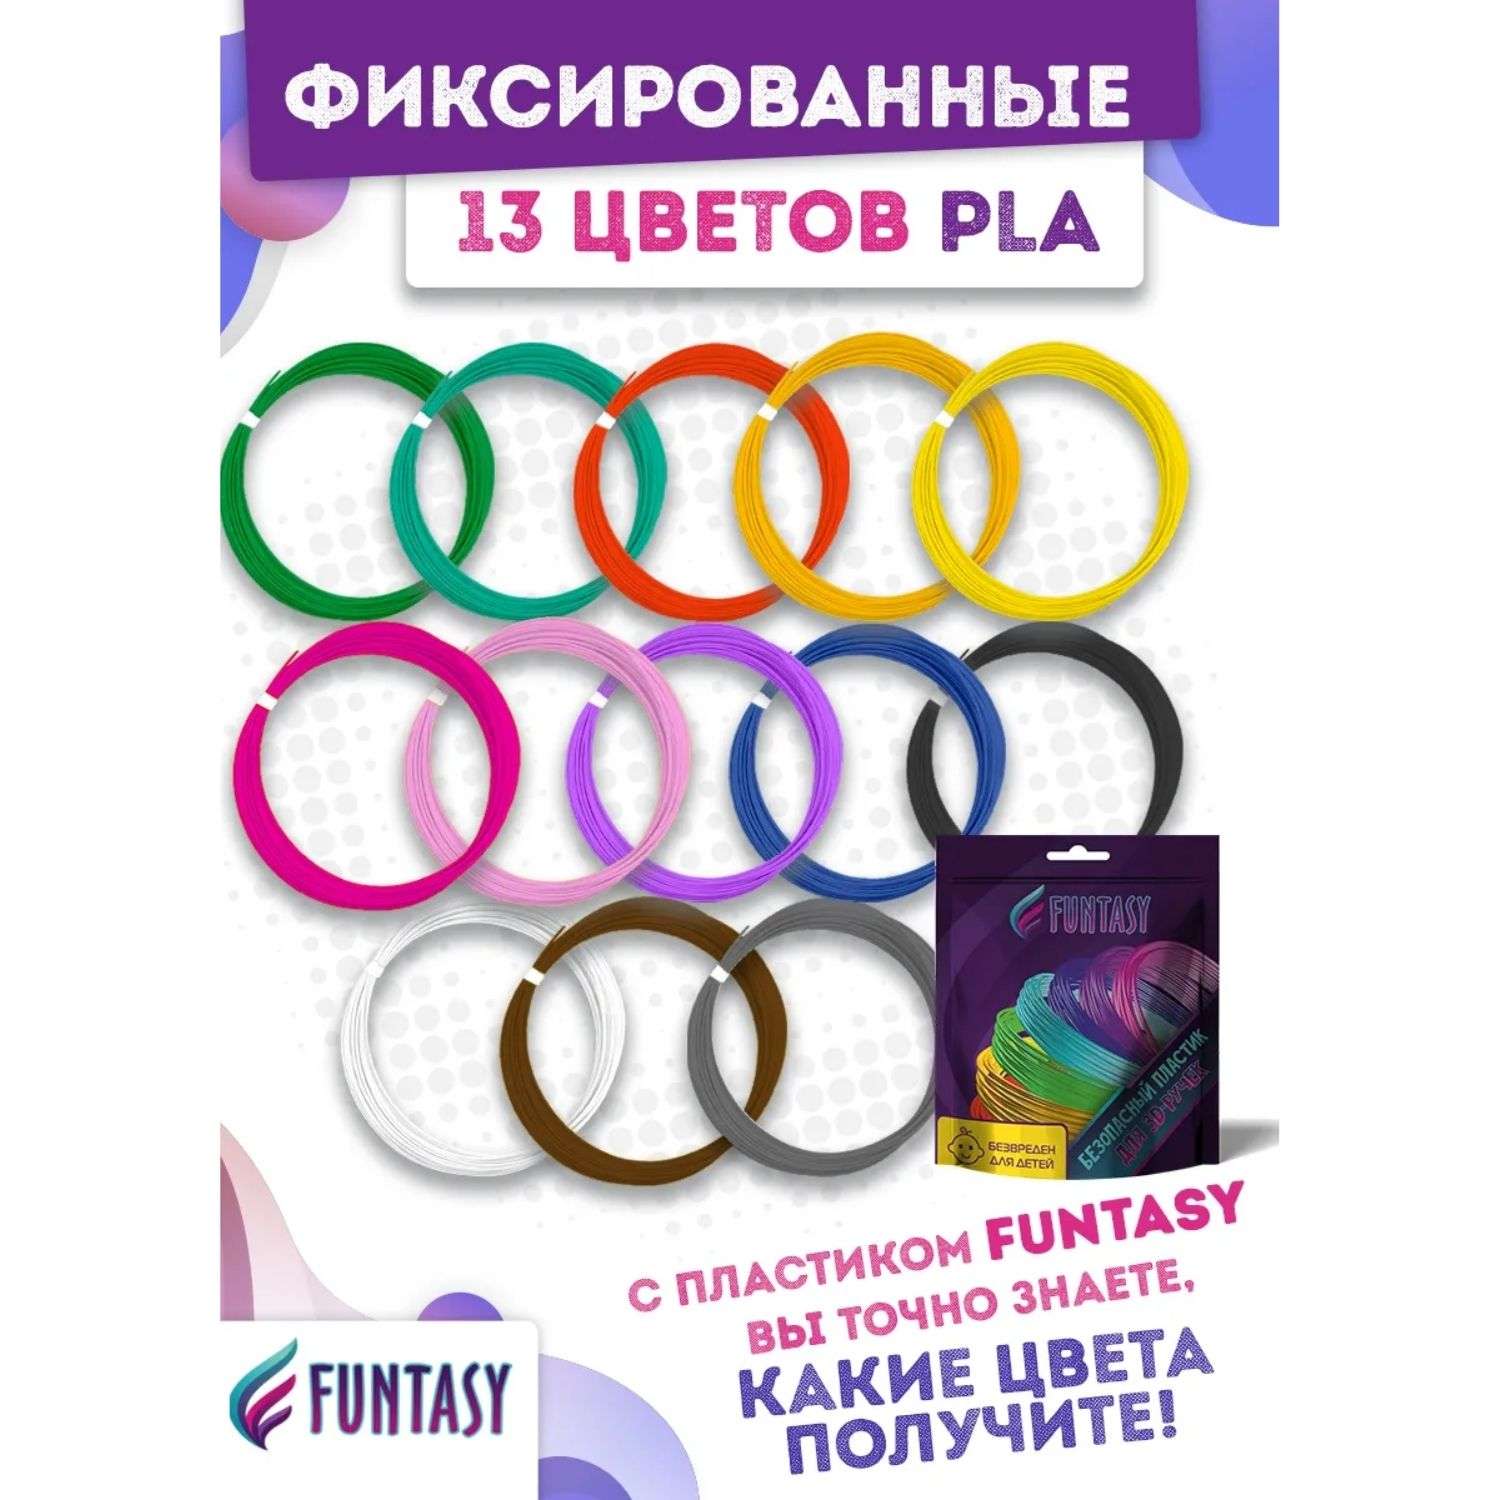 Пластик PLA для 3d ручки Funtasy 13 цветов по 5 метров - фото 2